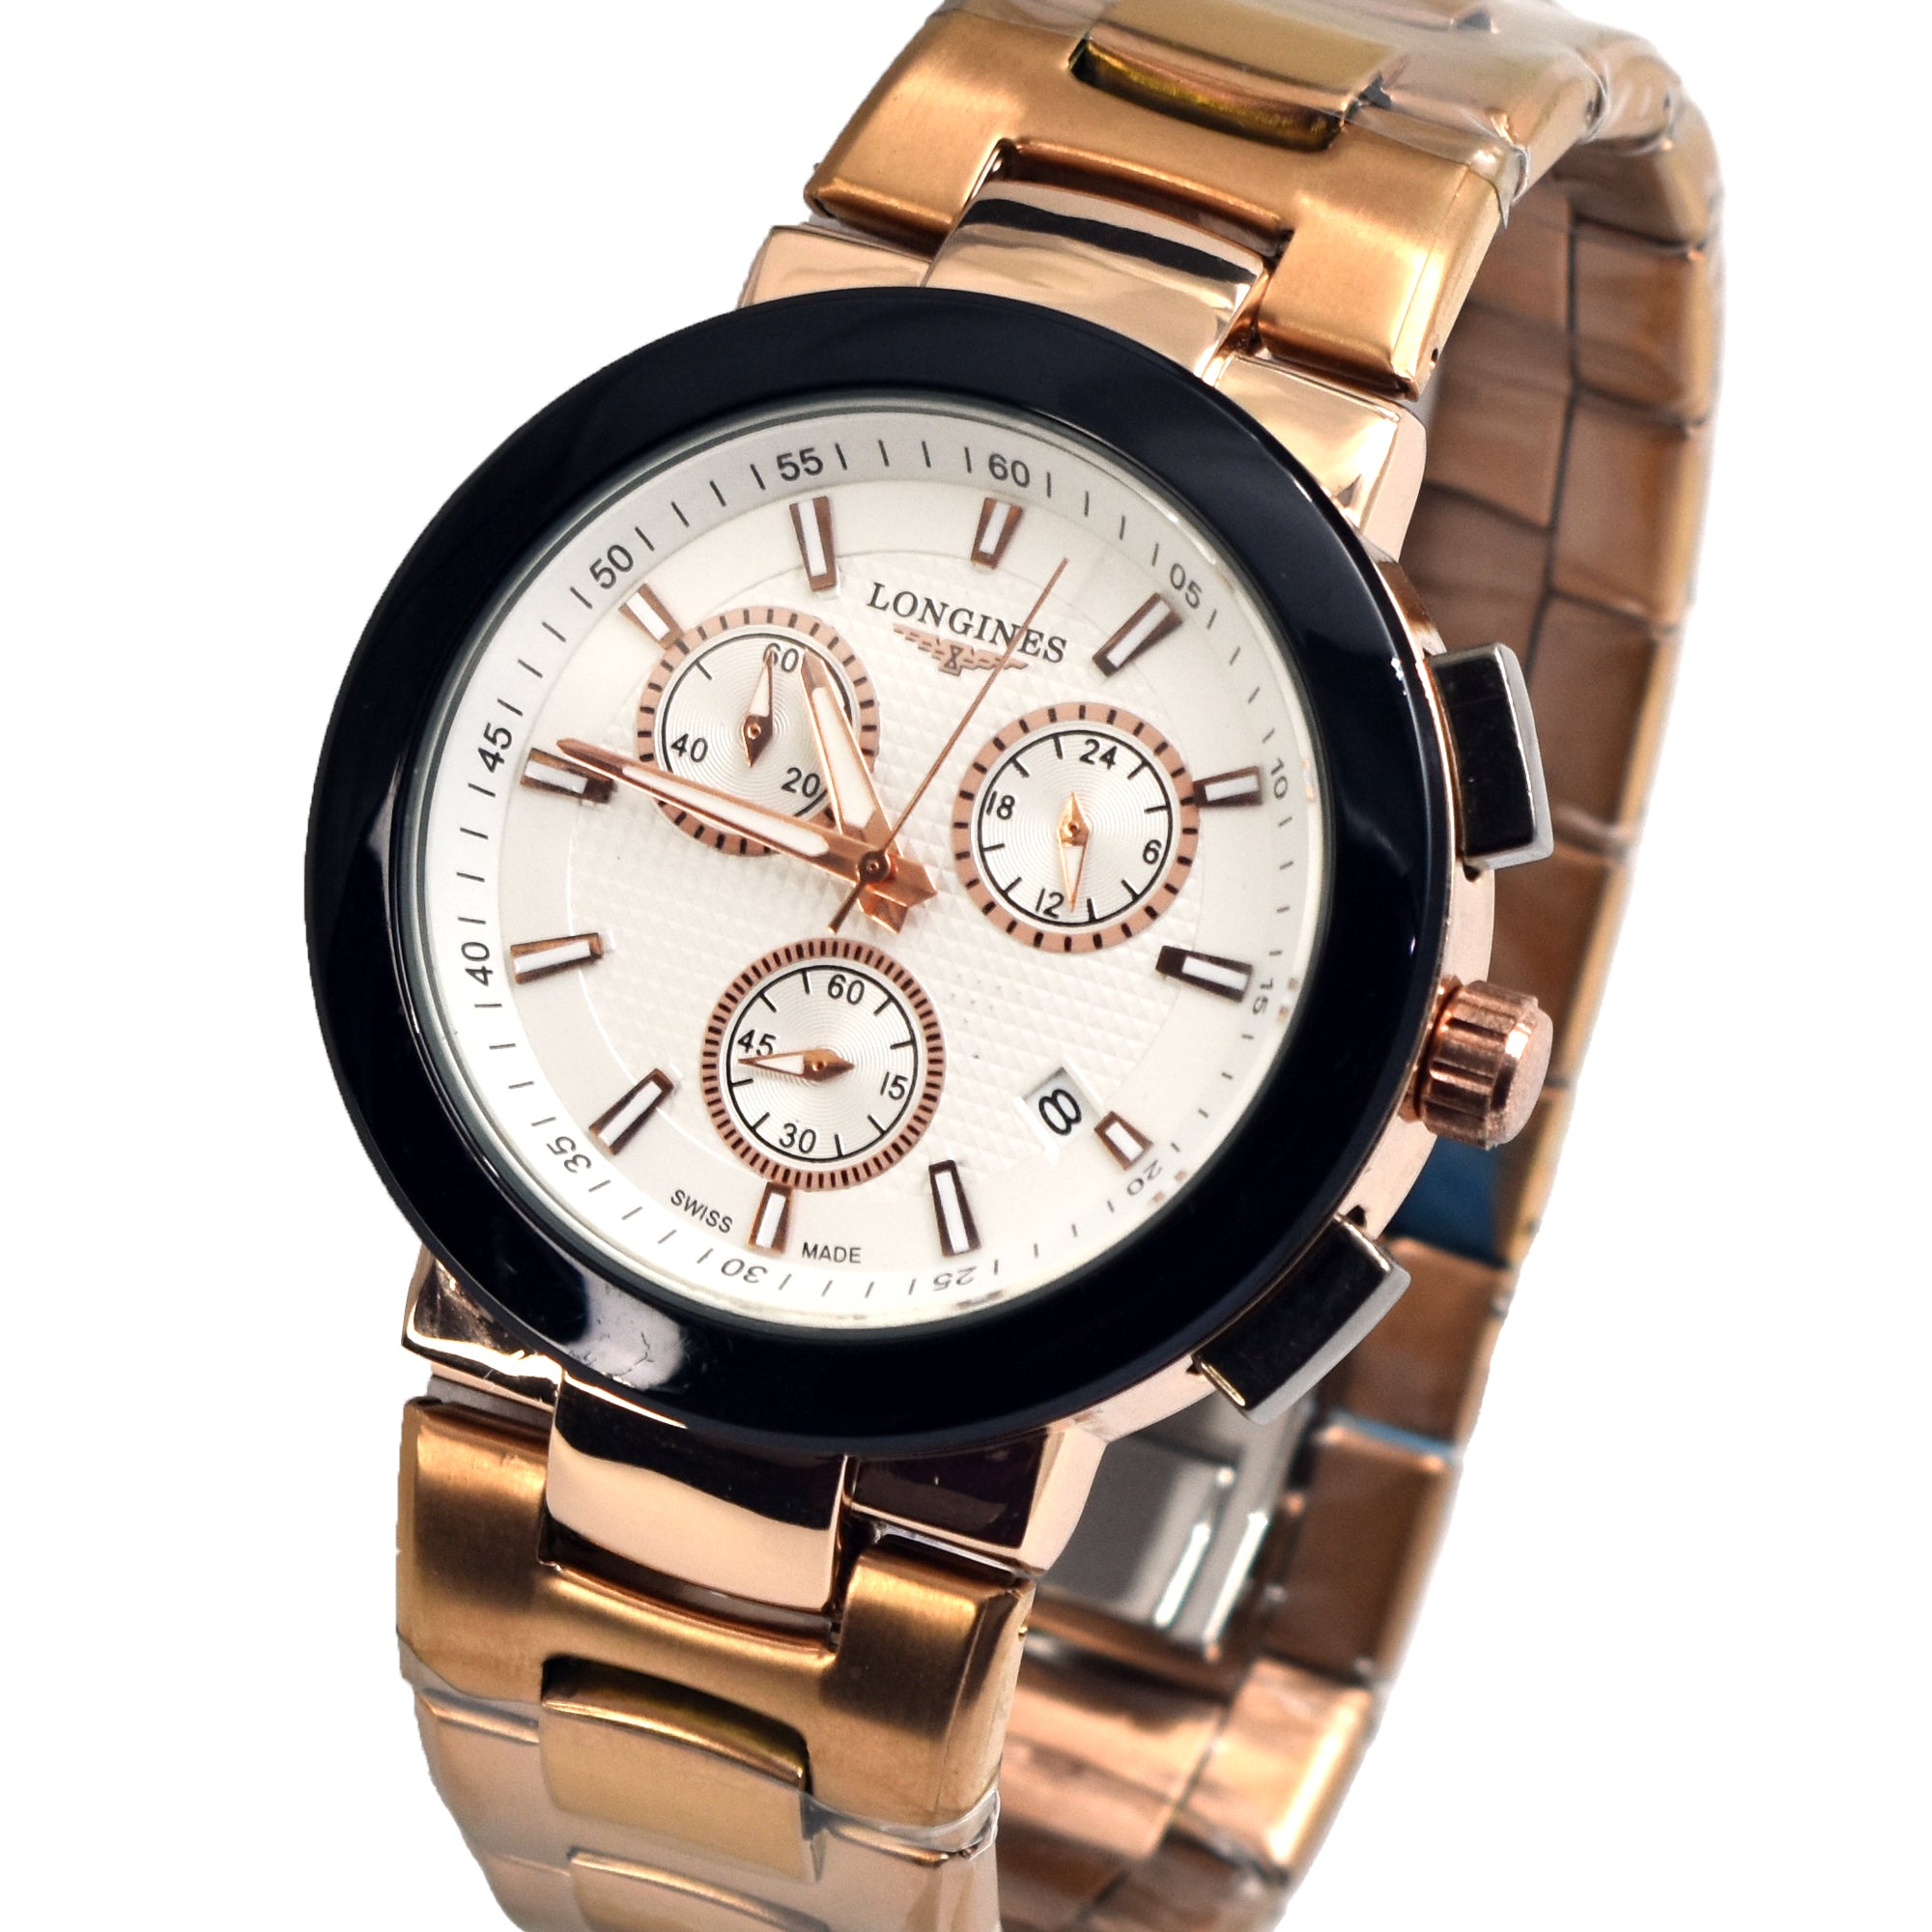 Business Class Premium Quality Quartz Watch - LNG Watch 01